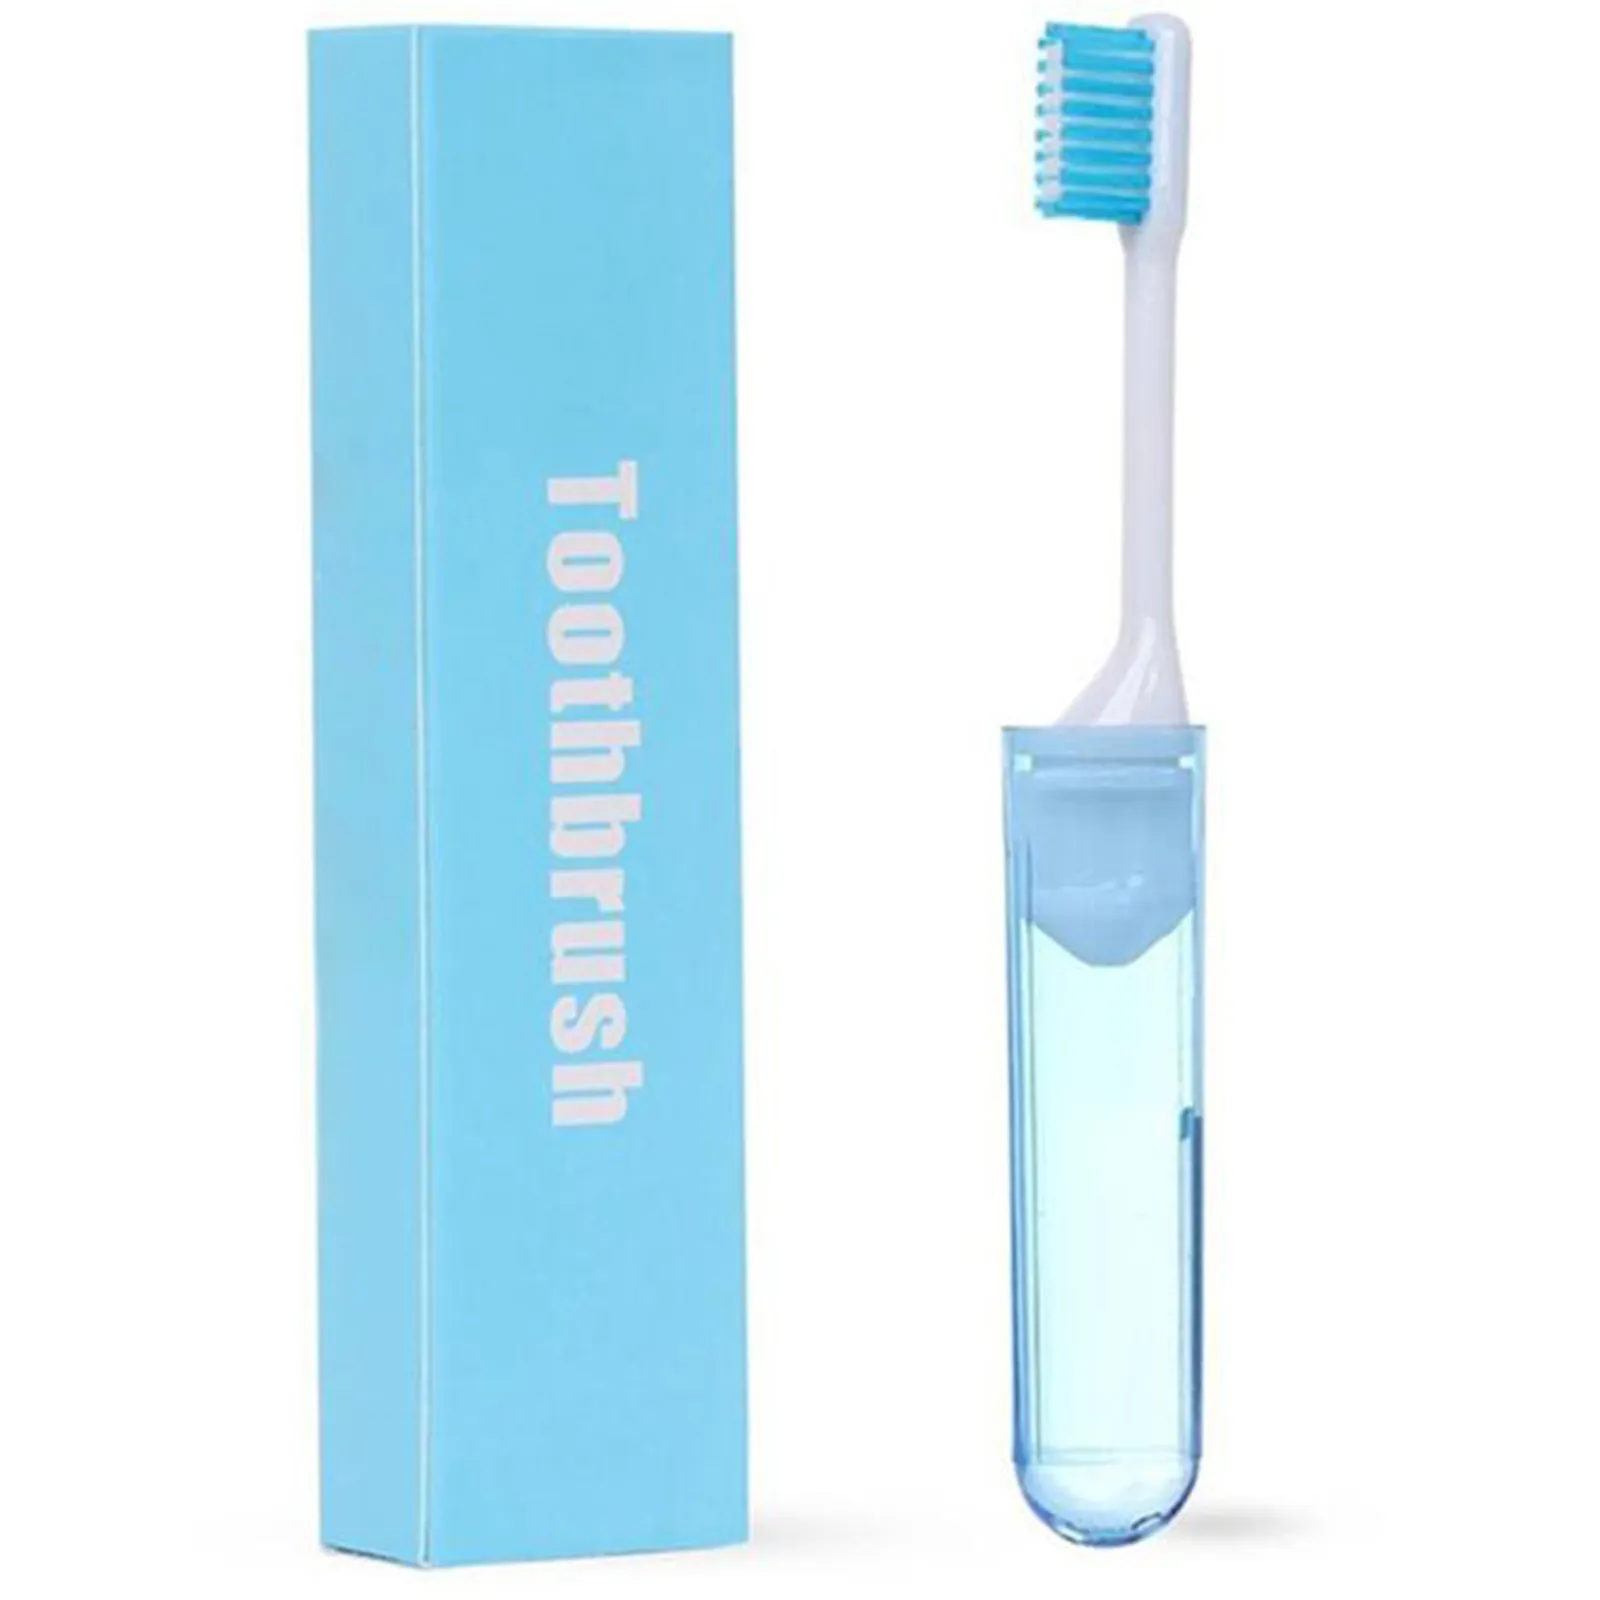 Zpacks Ultralight Travel Toothbrush - 登山用品